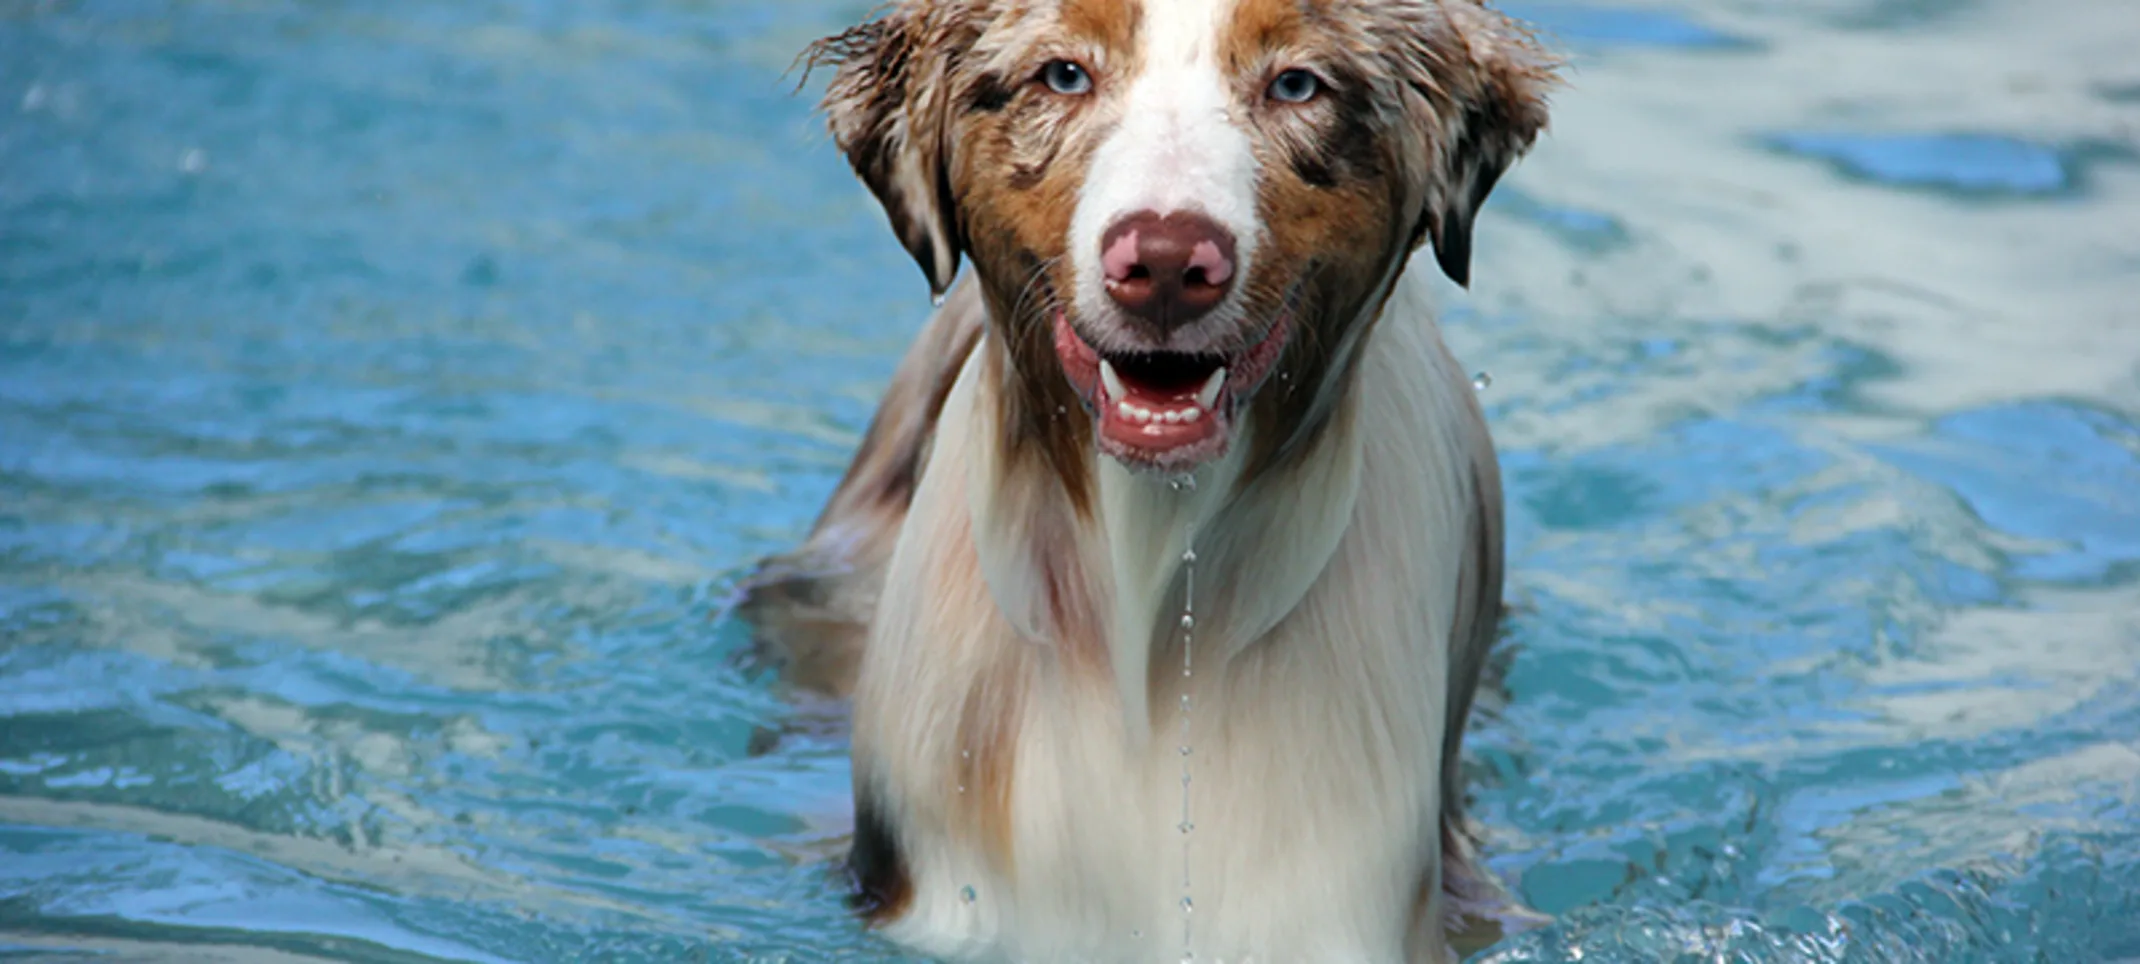 Lauderdale Pet Lodge Dog in Pool Area